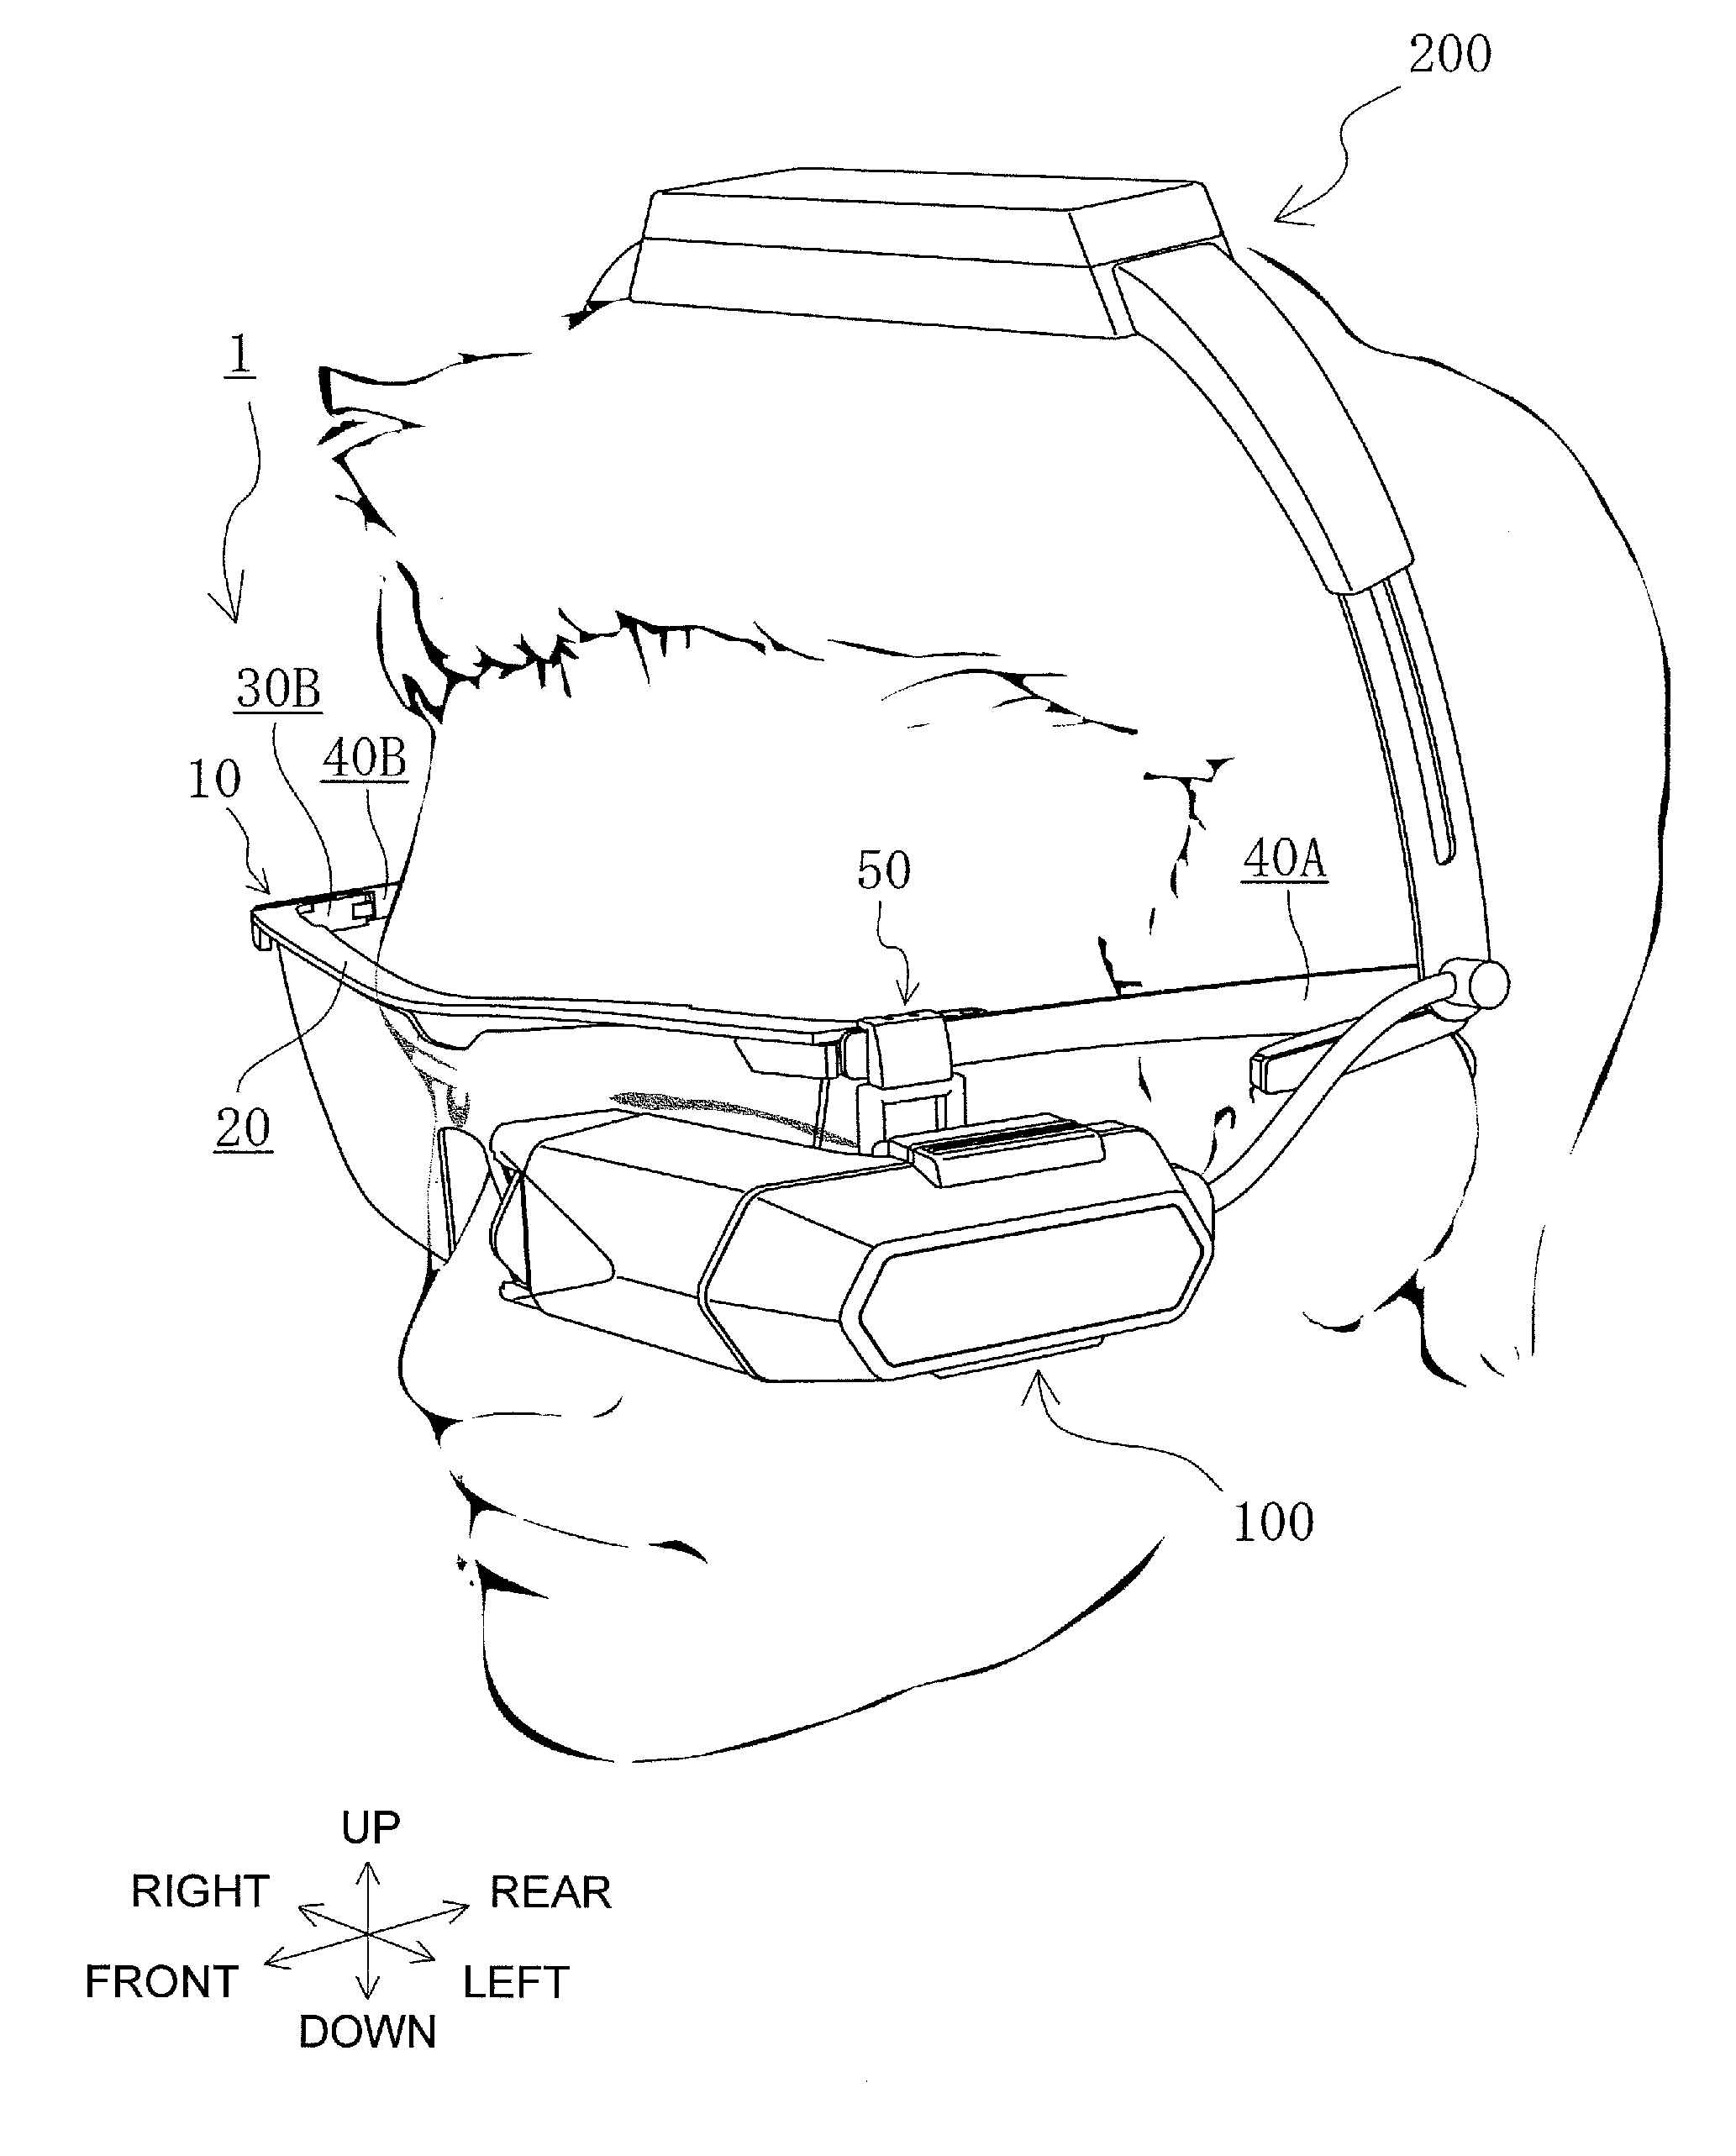 Head mount display